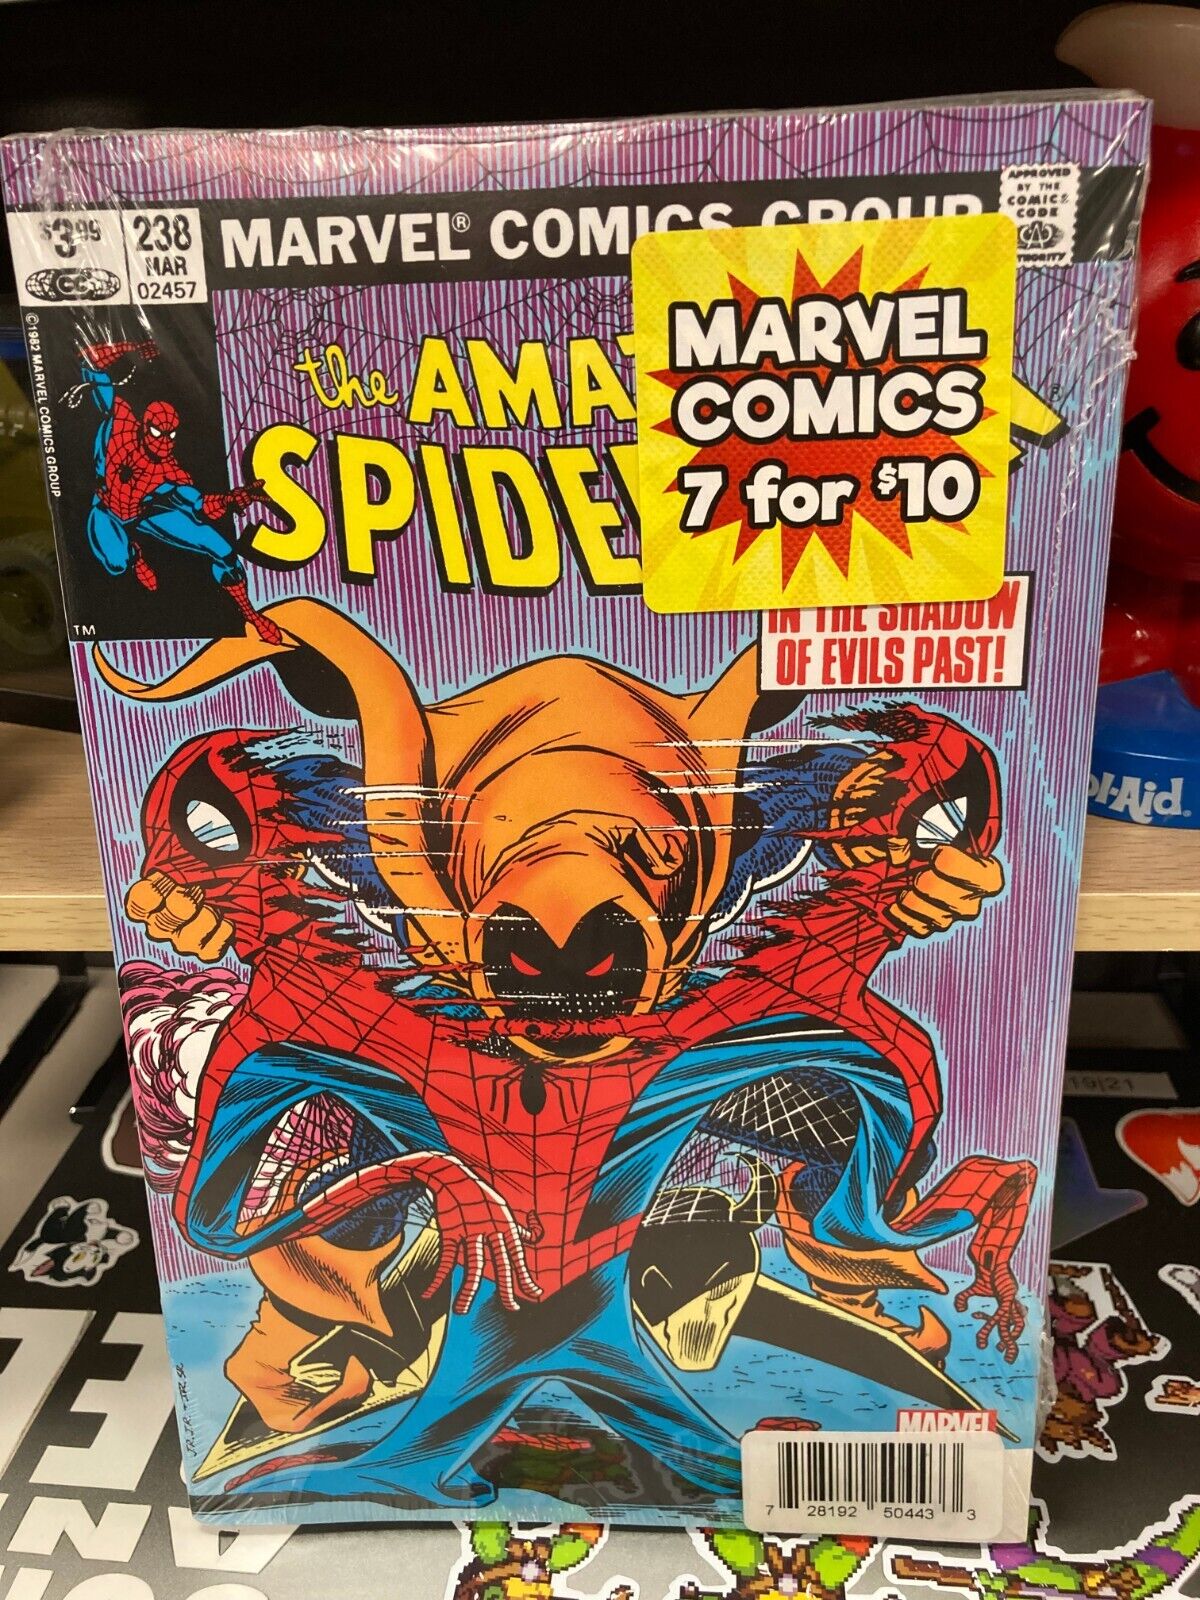 AMAZING SPIDER-MAN #238 WALMART 7 for $10 - Sealed - Marvel Comics